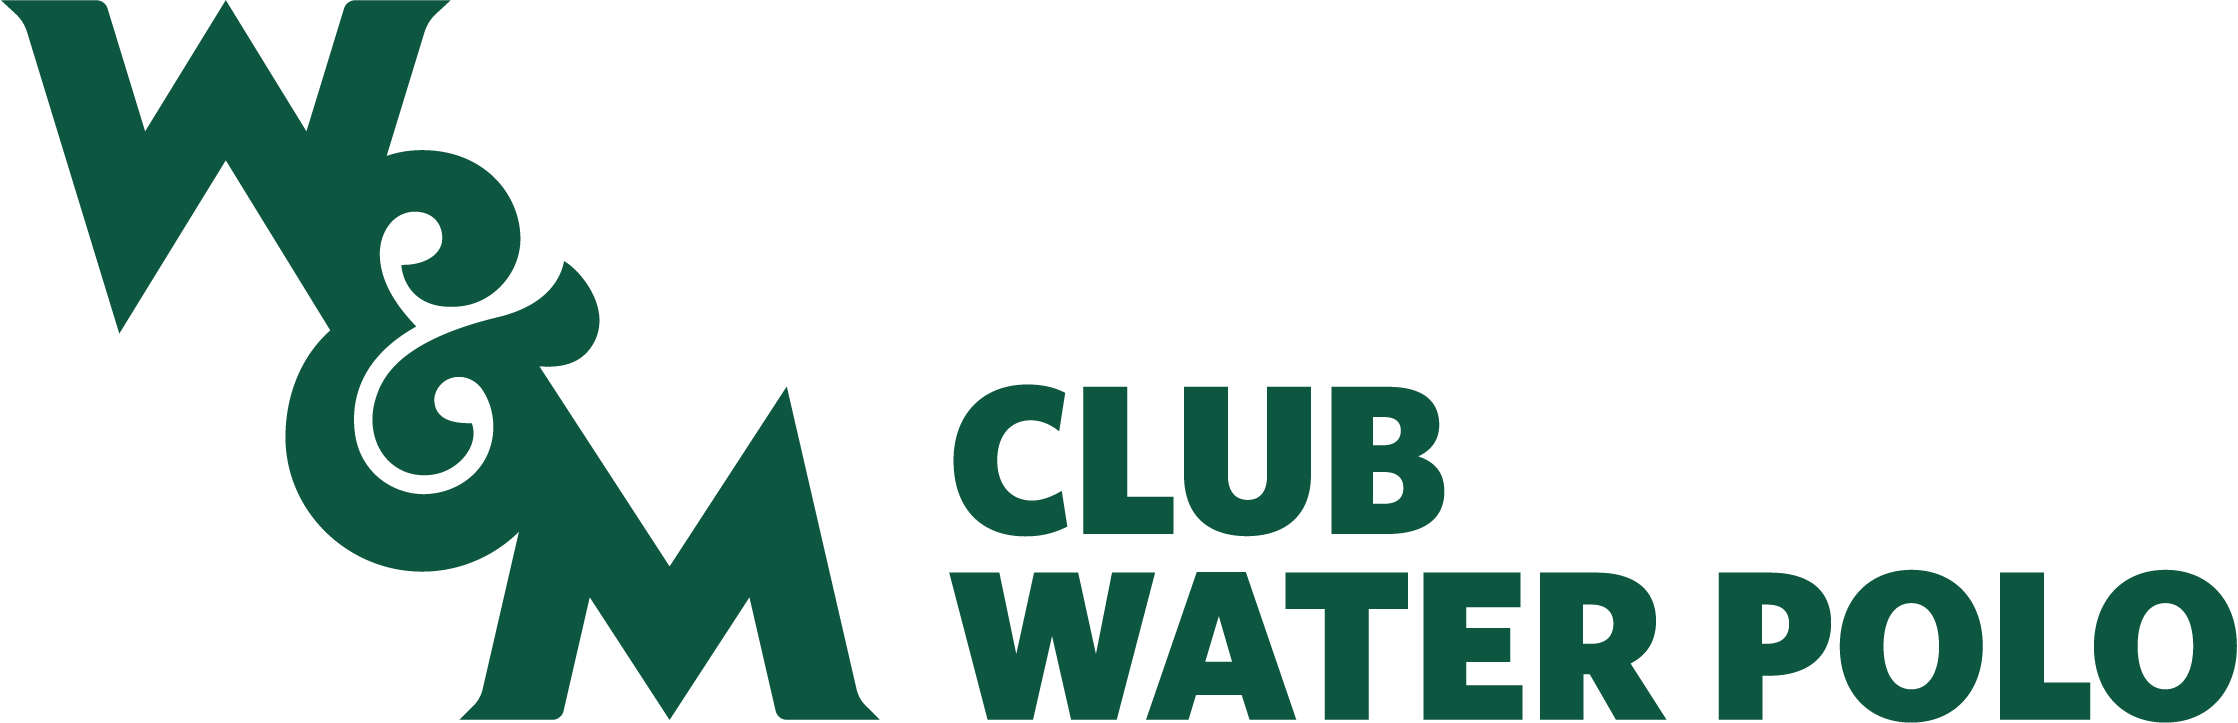 Water Polo Club Logo